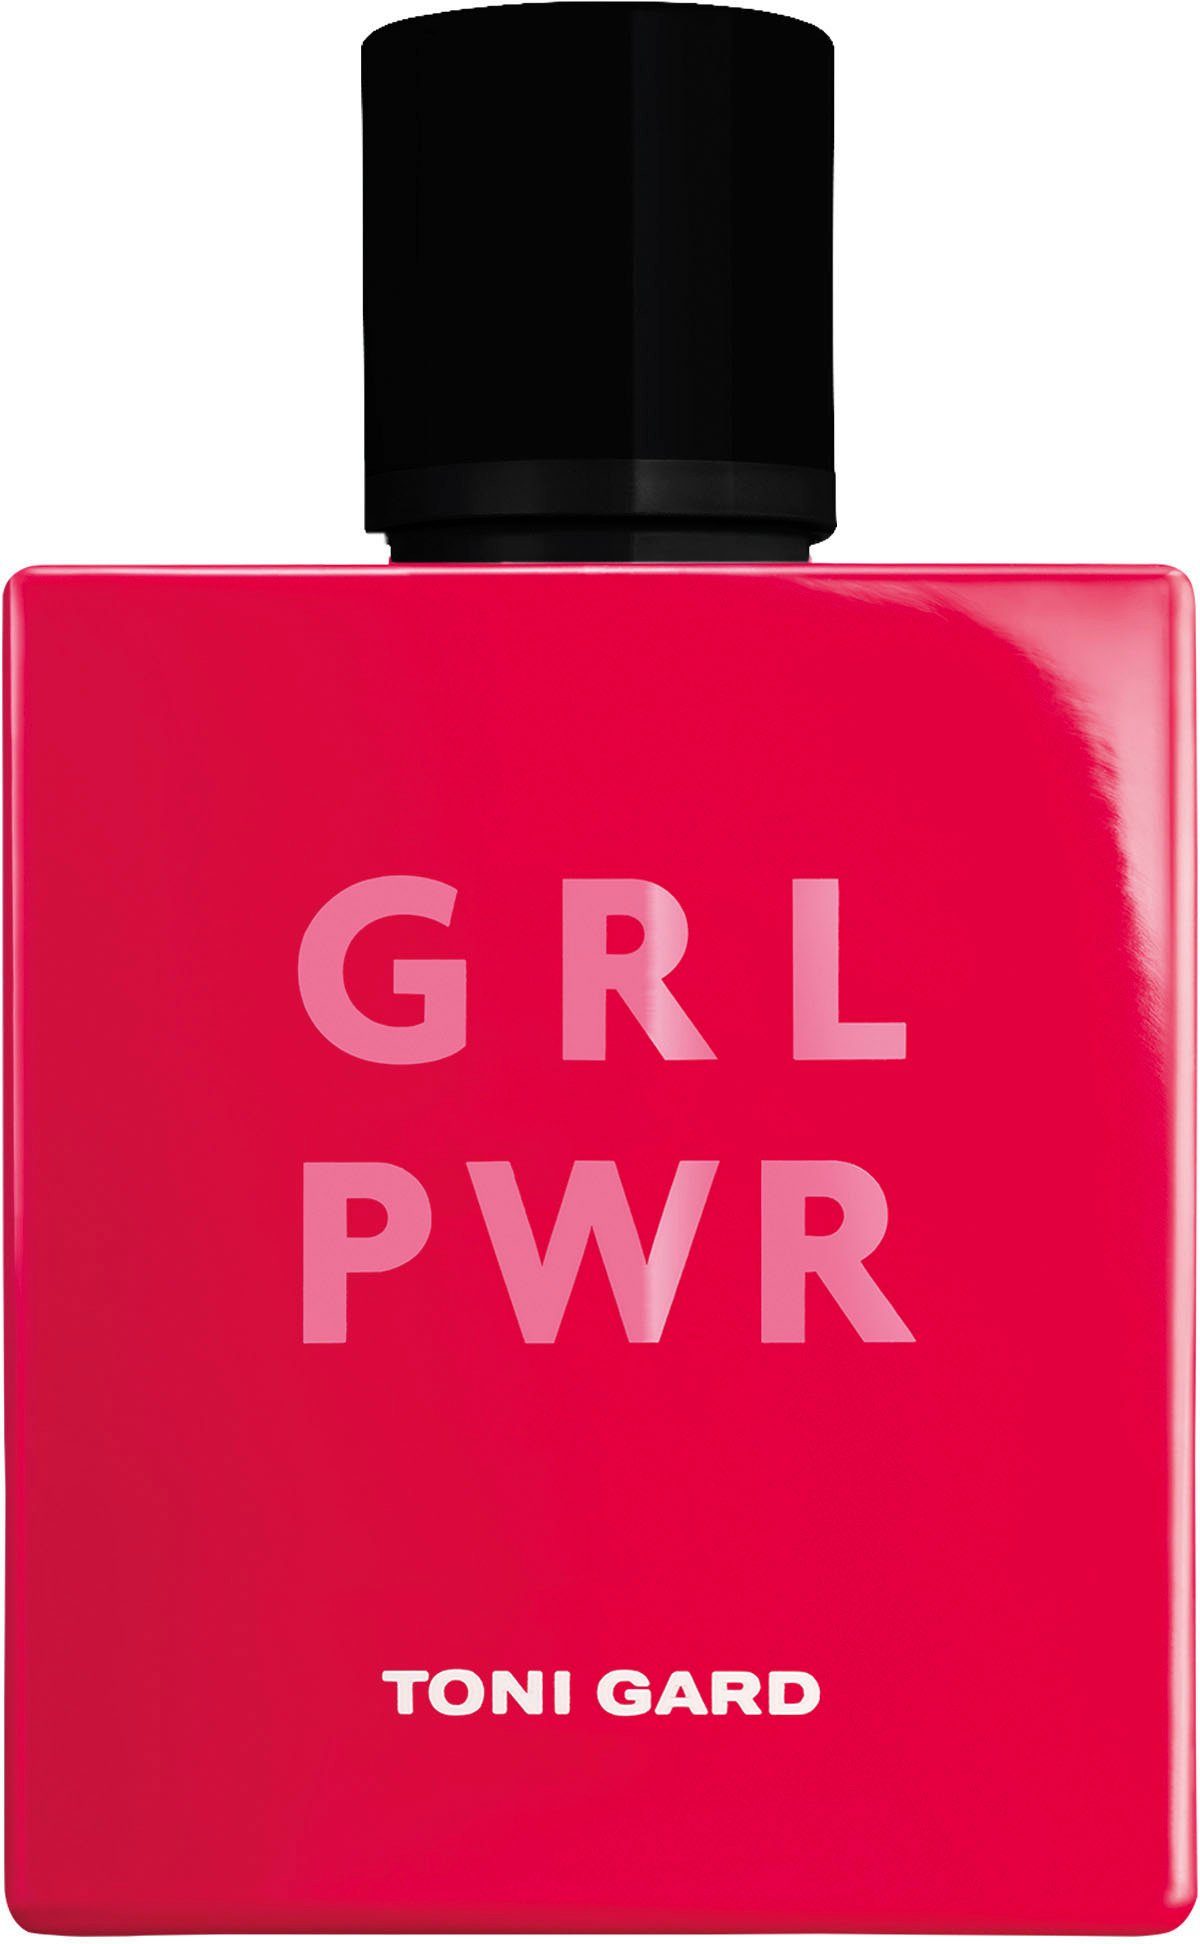 PWR Parfum TONI GARD GRL de EdP Eau